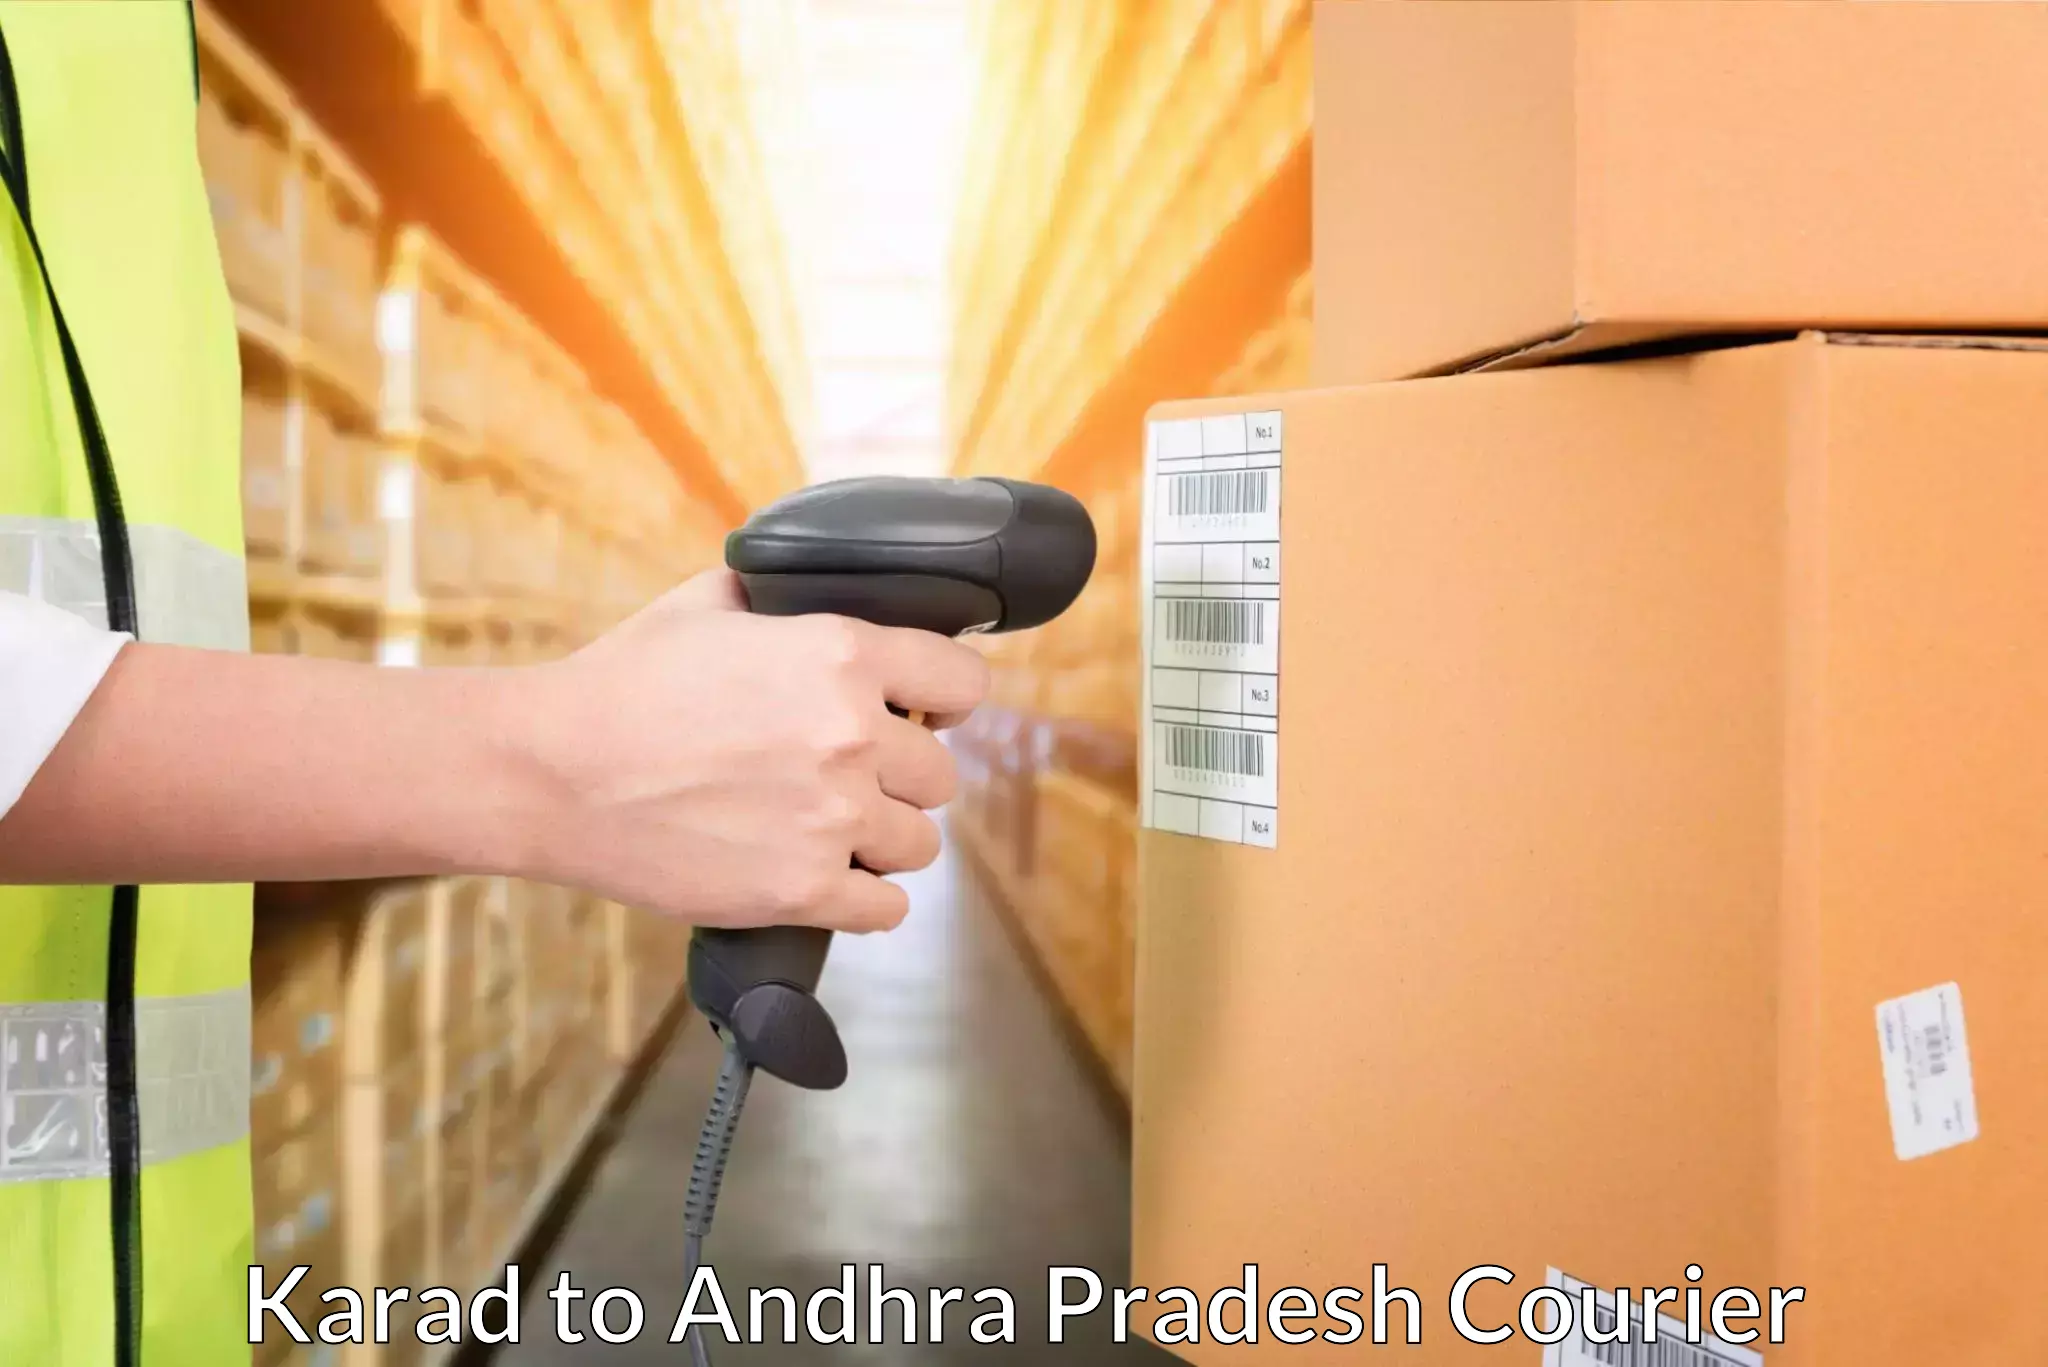 Reliable shipping partners Karad to Visakhapatnam